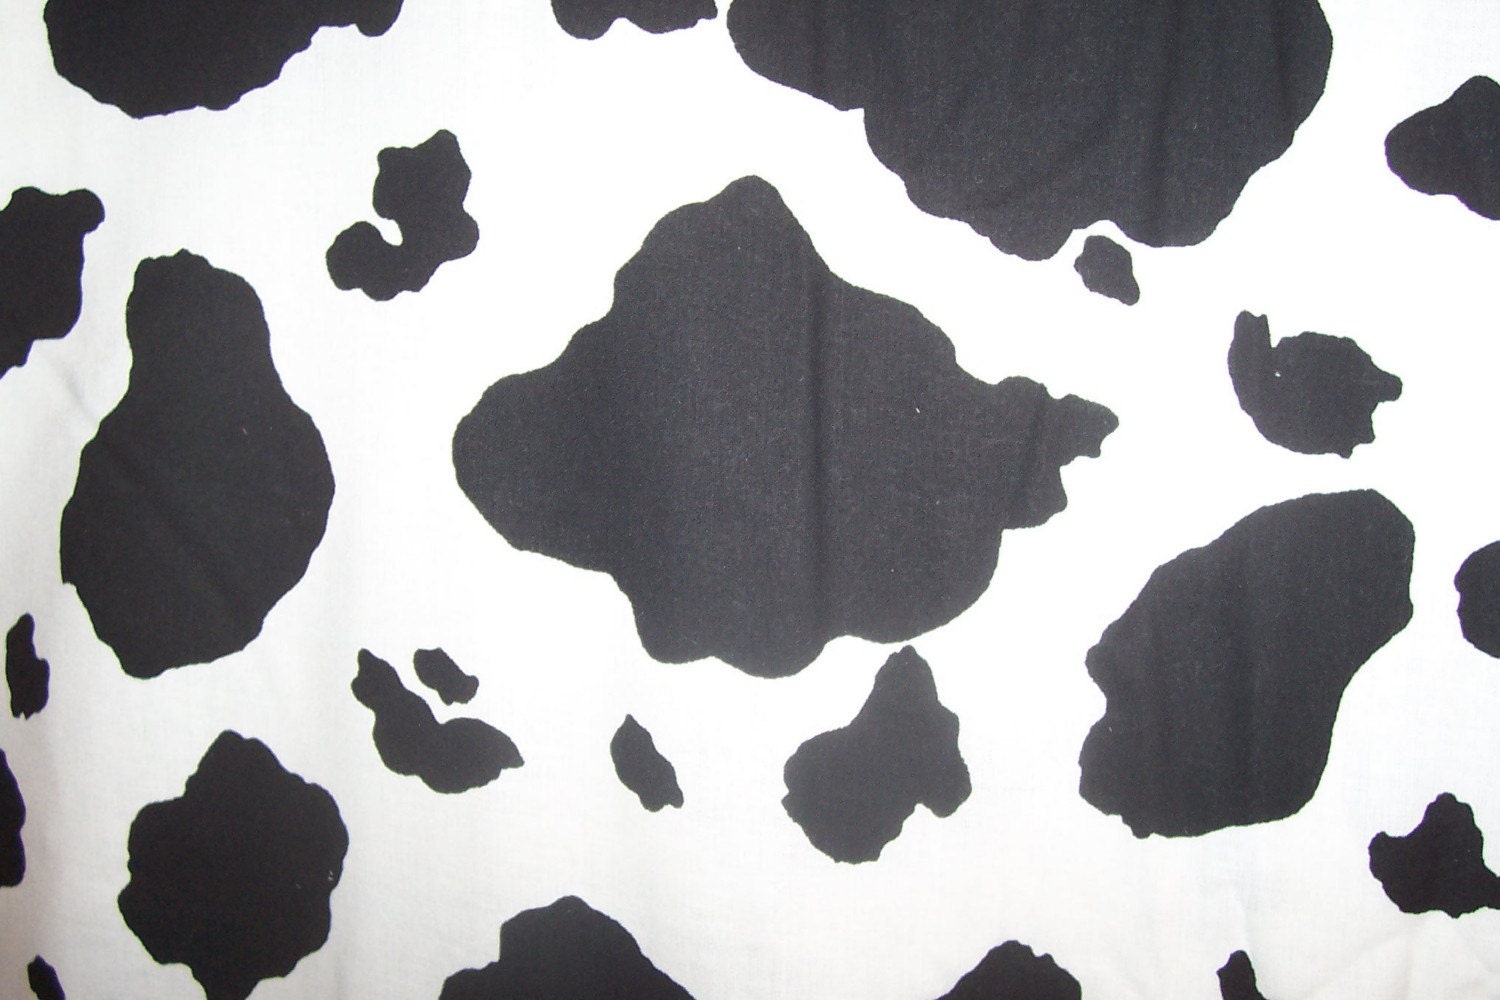 Cow Fabric